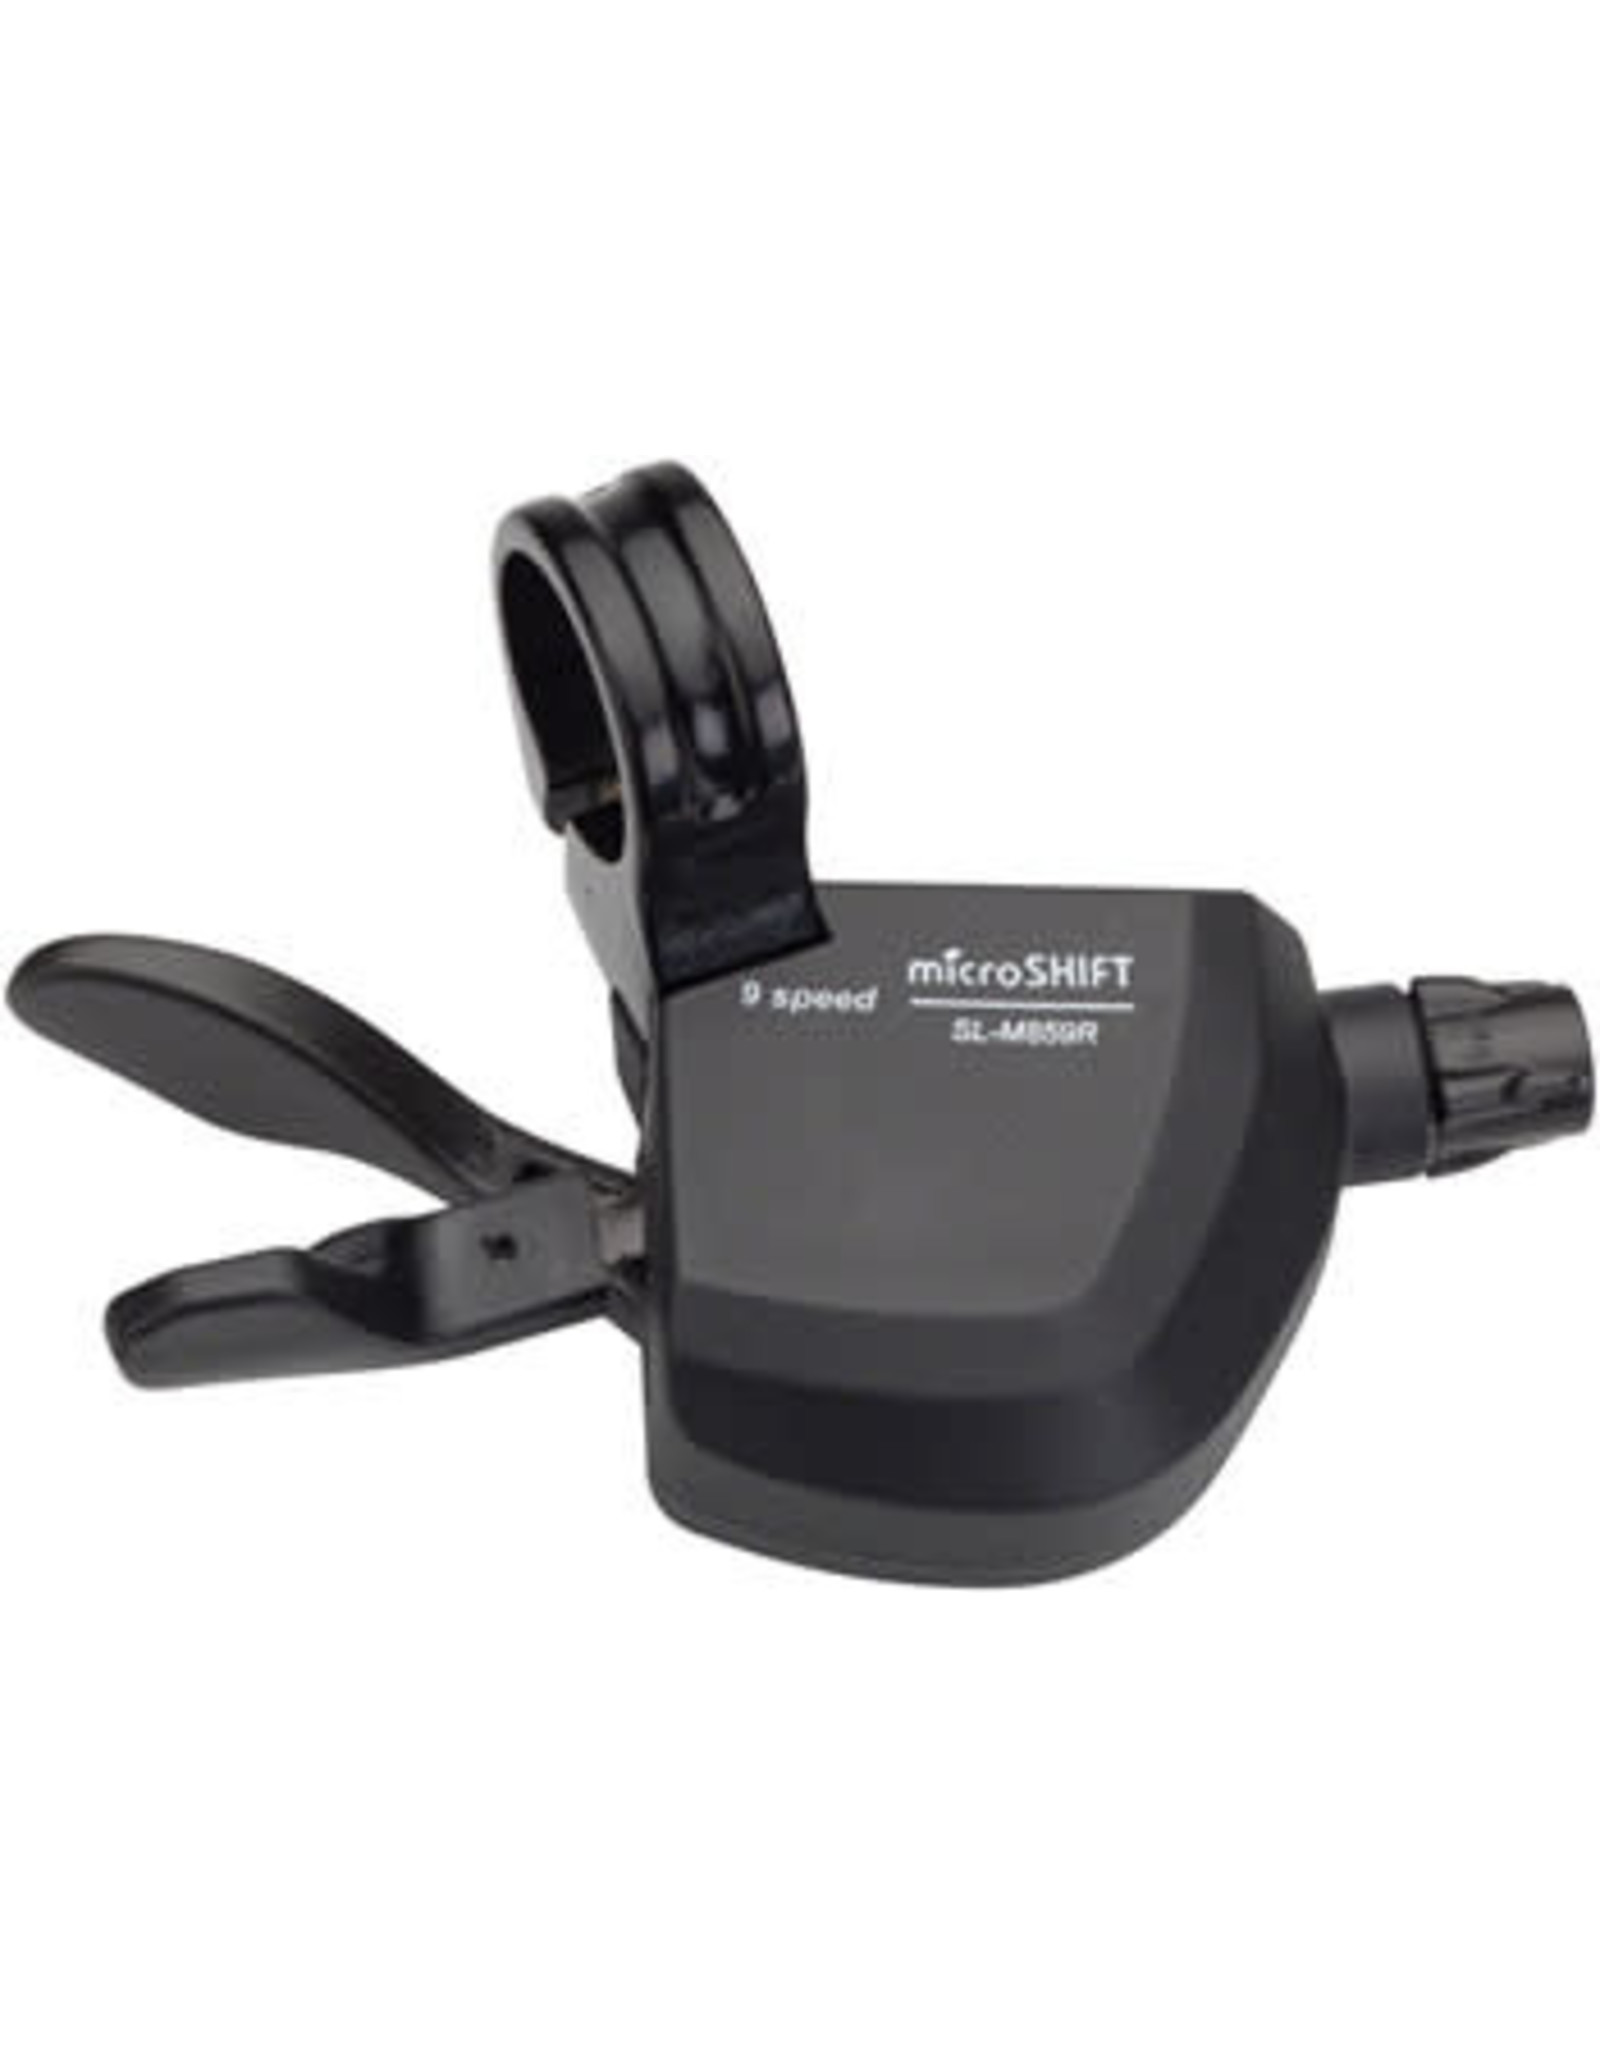 MicroShift microSHIFT MarvoLT Right Trigger Shifter, 9-Speed, Alloy Lever, Shimano Compatible